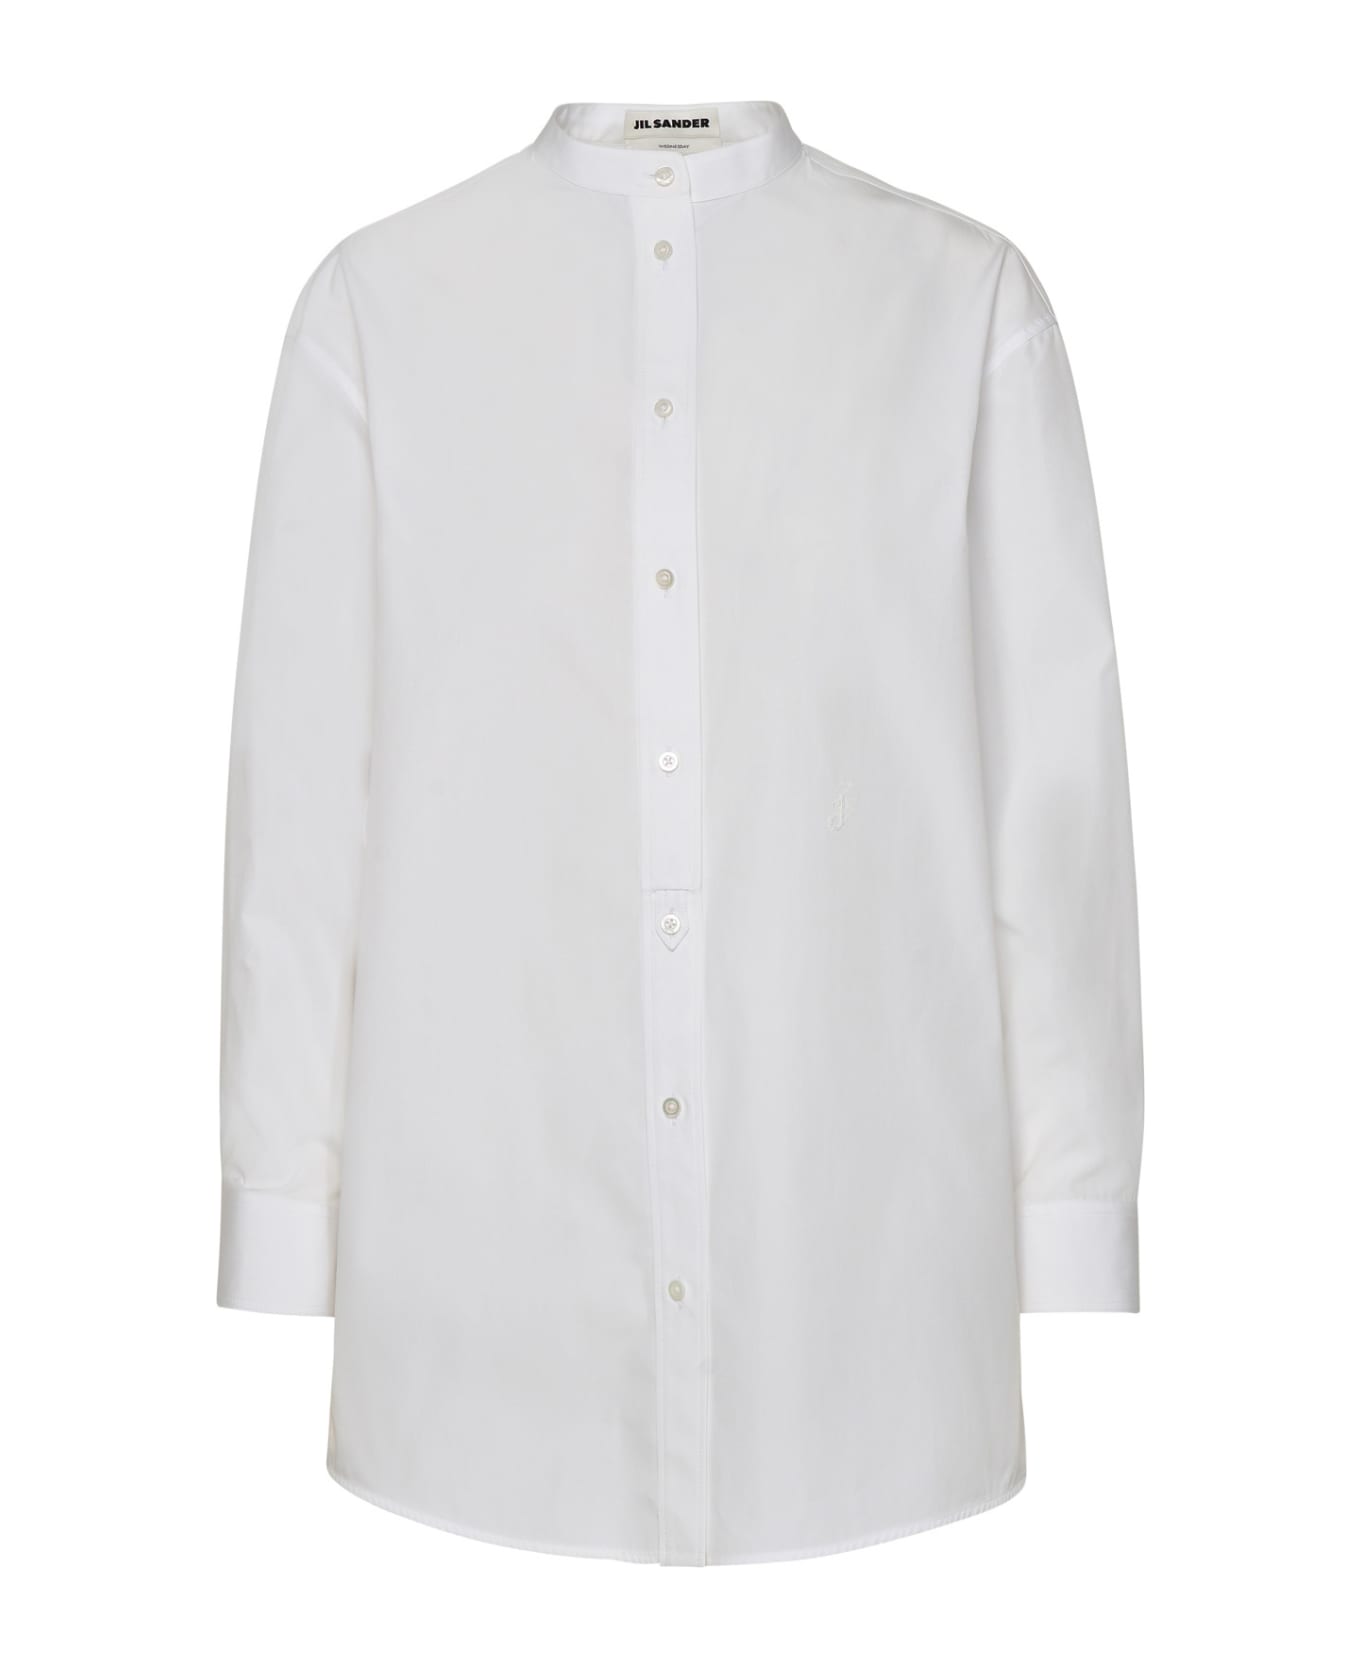 Jil Sander White Cotton Wednesday Shirt